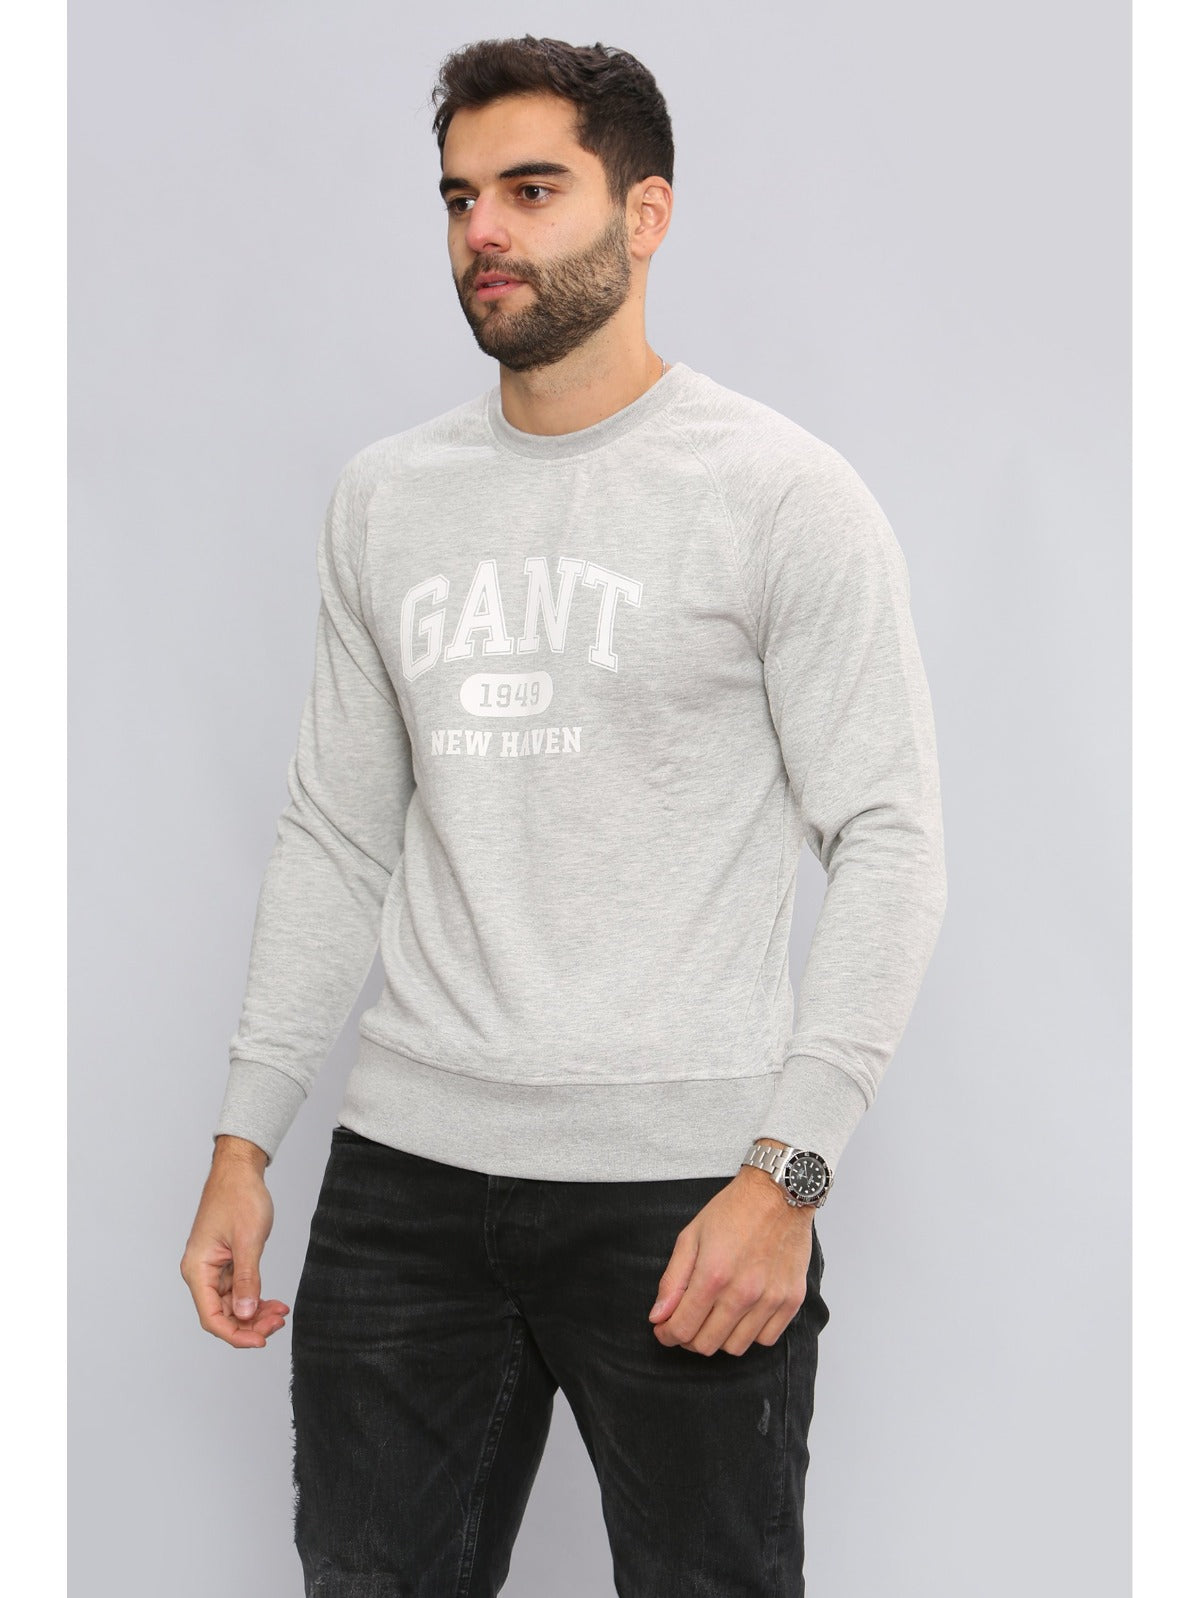 Gant_Summer Gant Mens Casual Printed Long Sleeved Sweatshirt GANT RAWDENIM